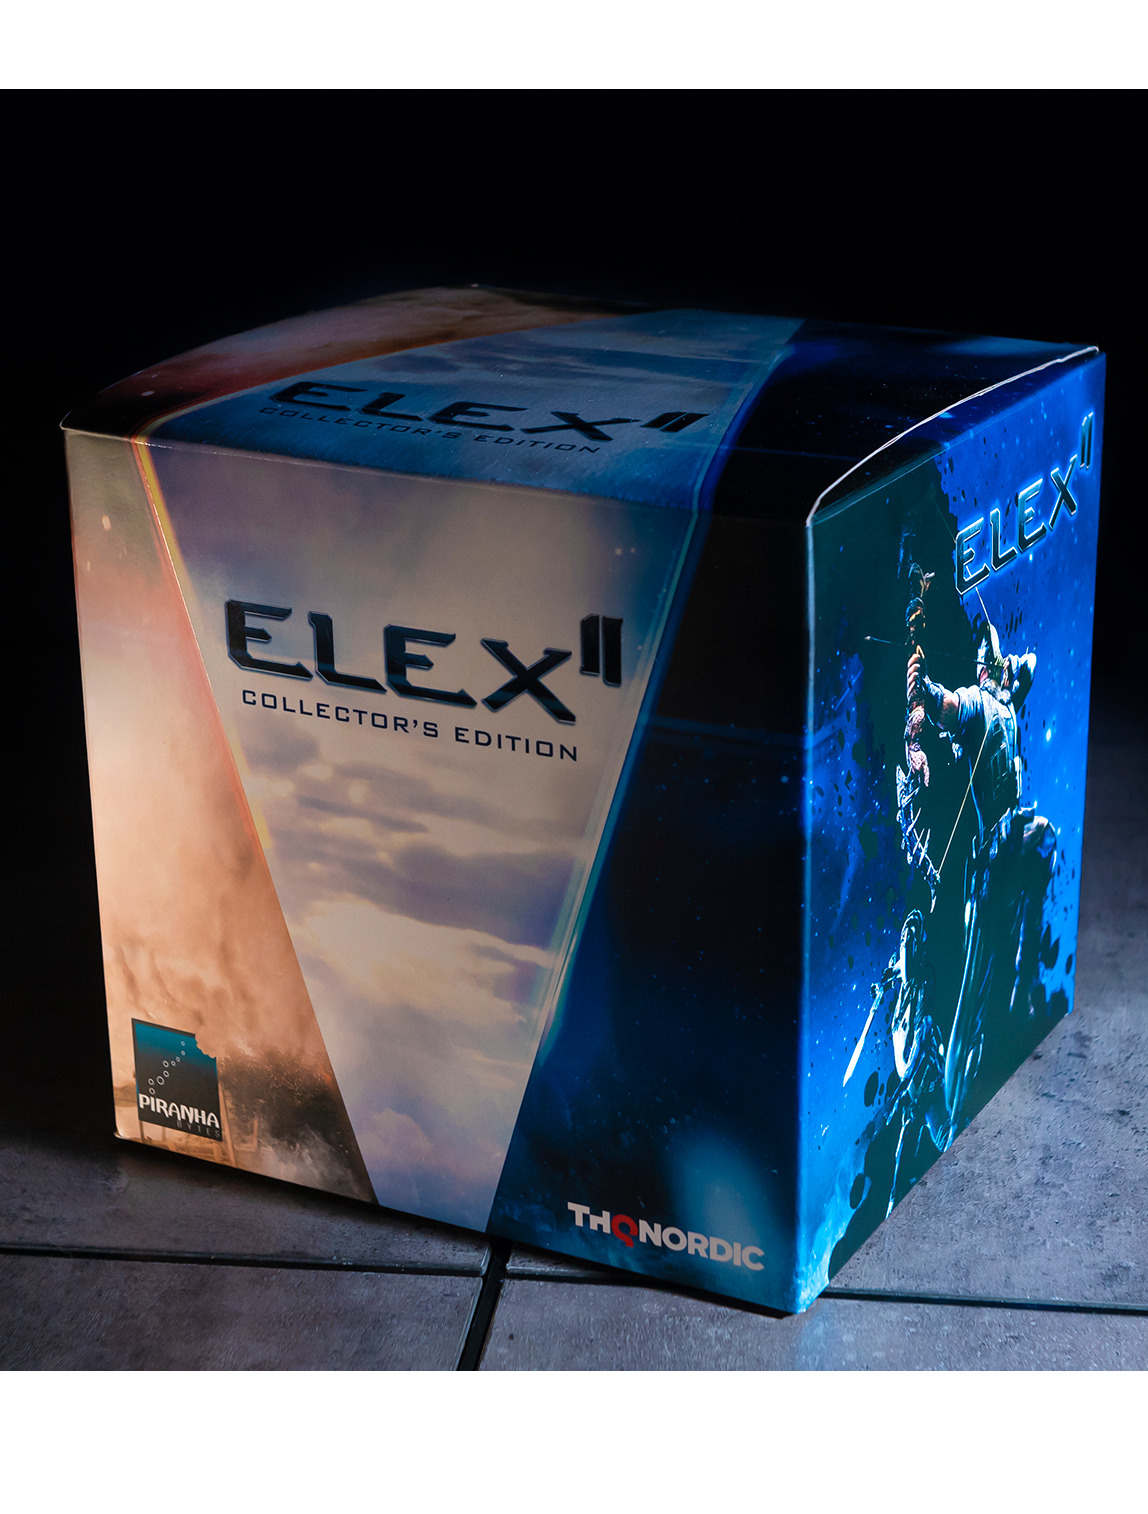 Elex II - Collectors Edition